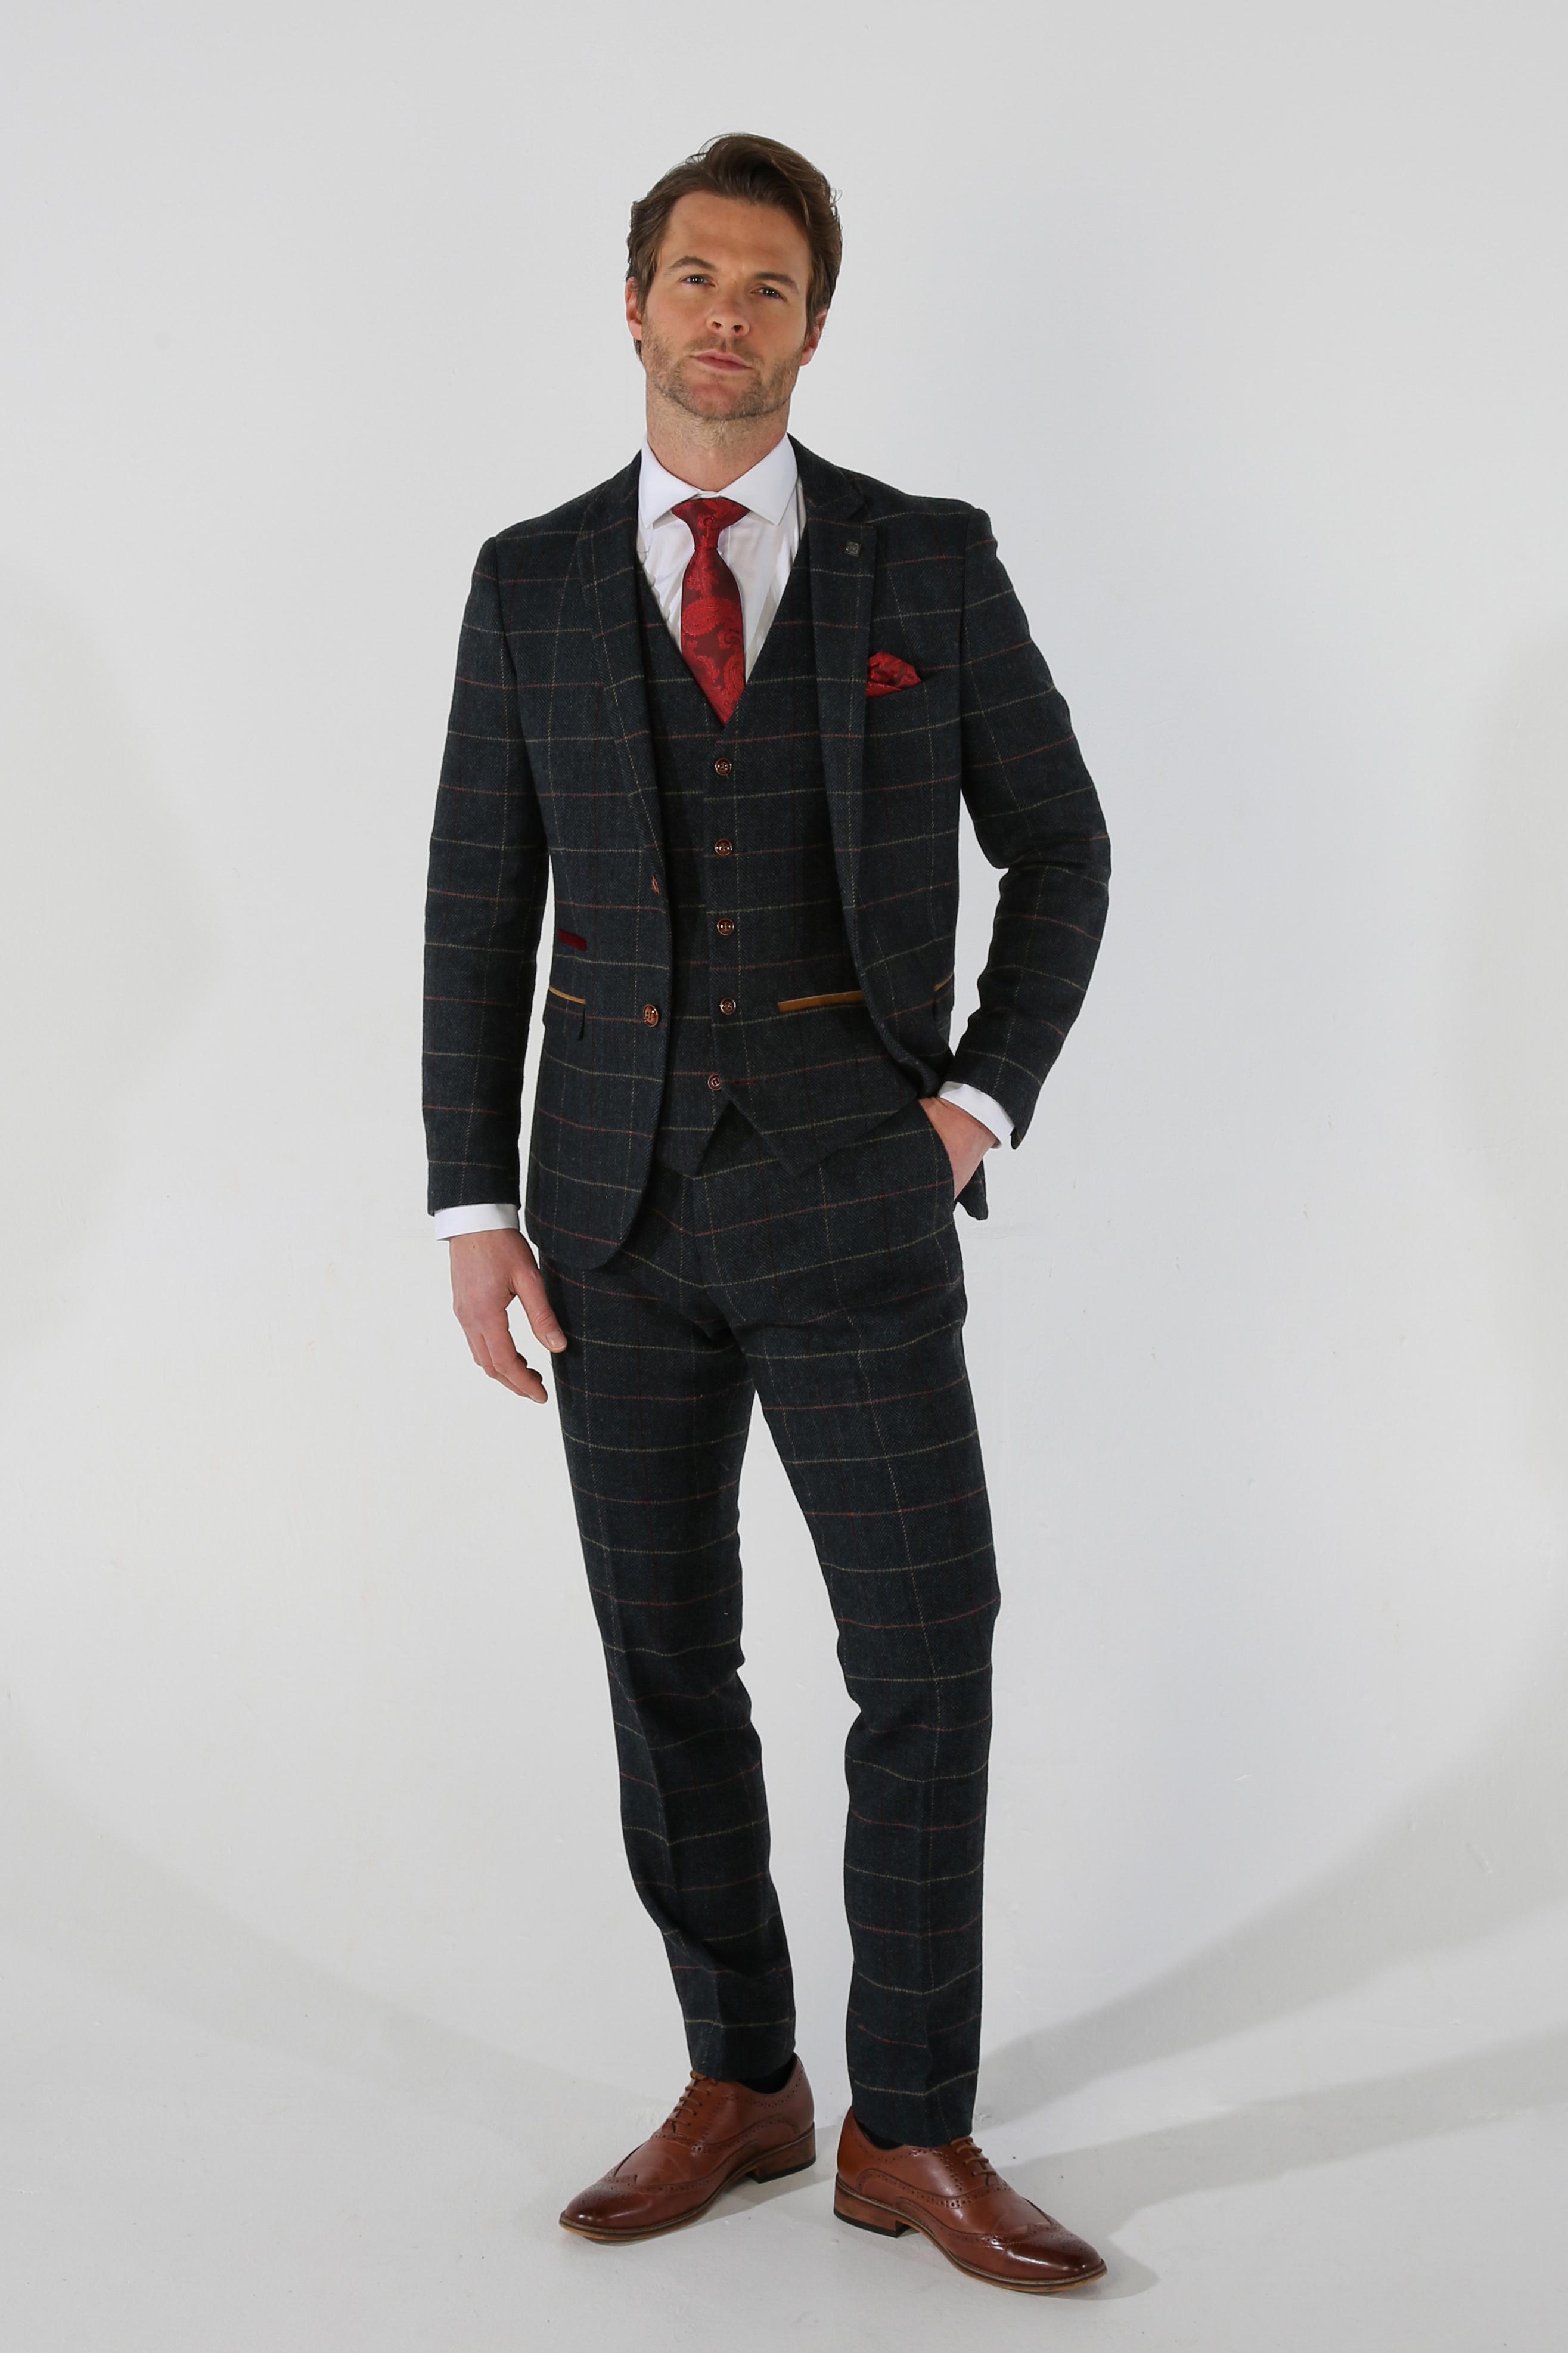 Men's Tweed Check Plaid Navy Suit - THOMAS